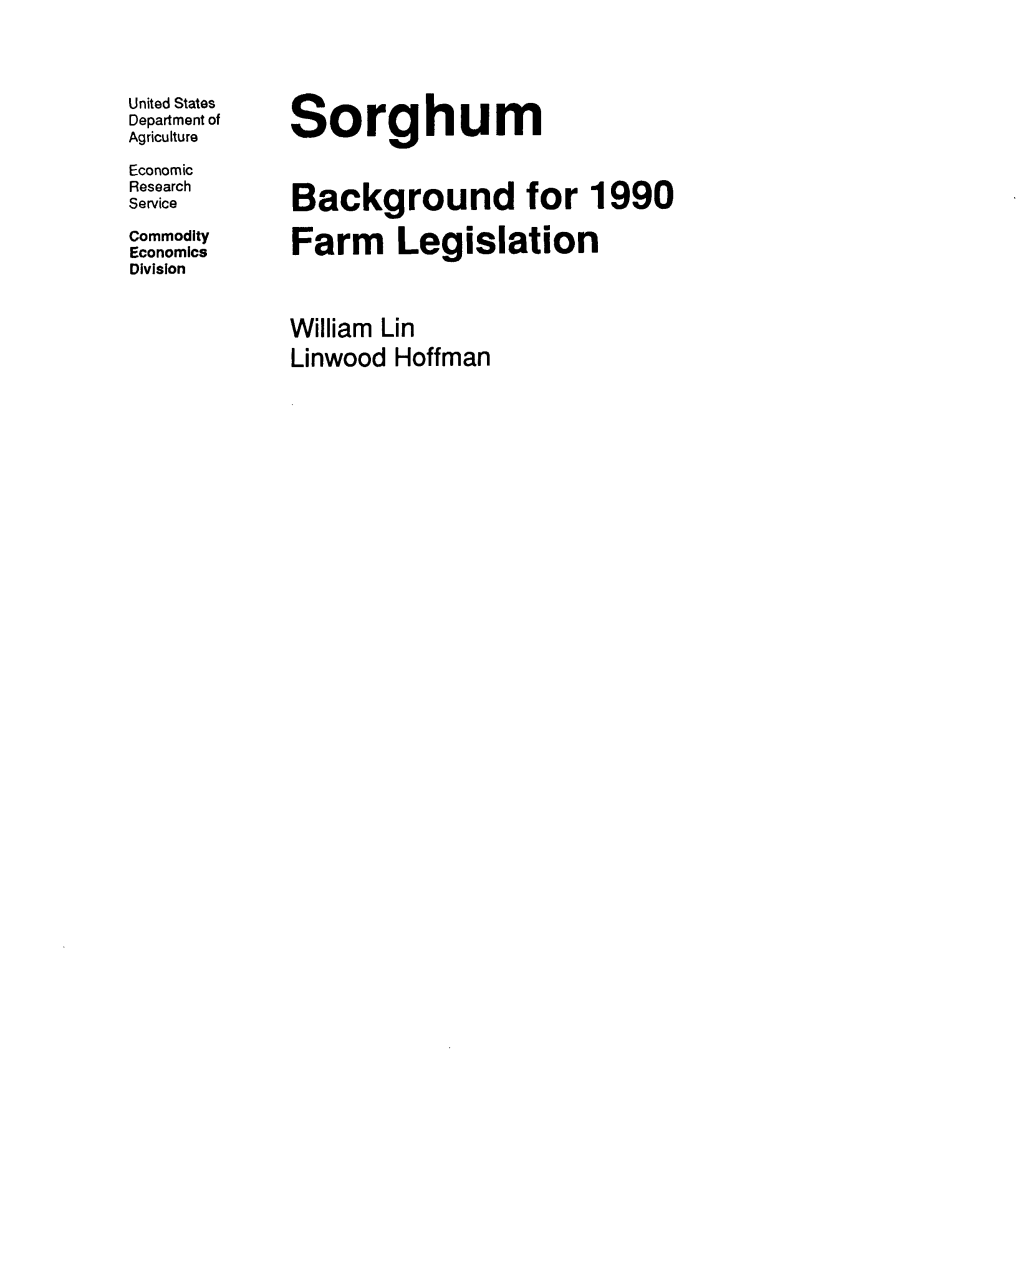 Sorghum: Background for 1990 Farm Legislation (AGES 89-67)